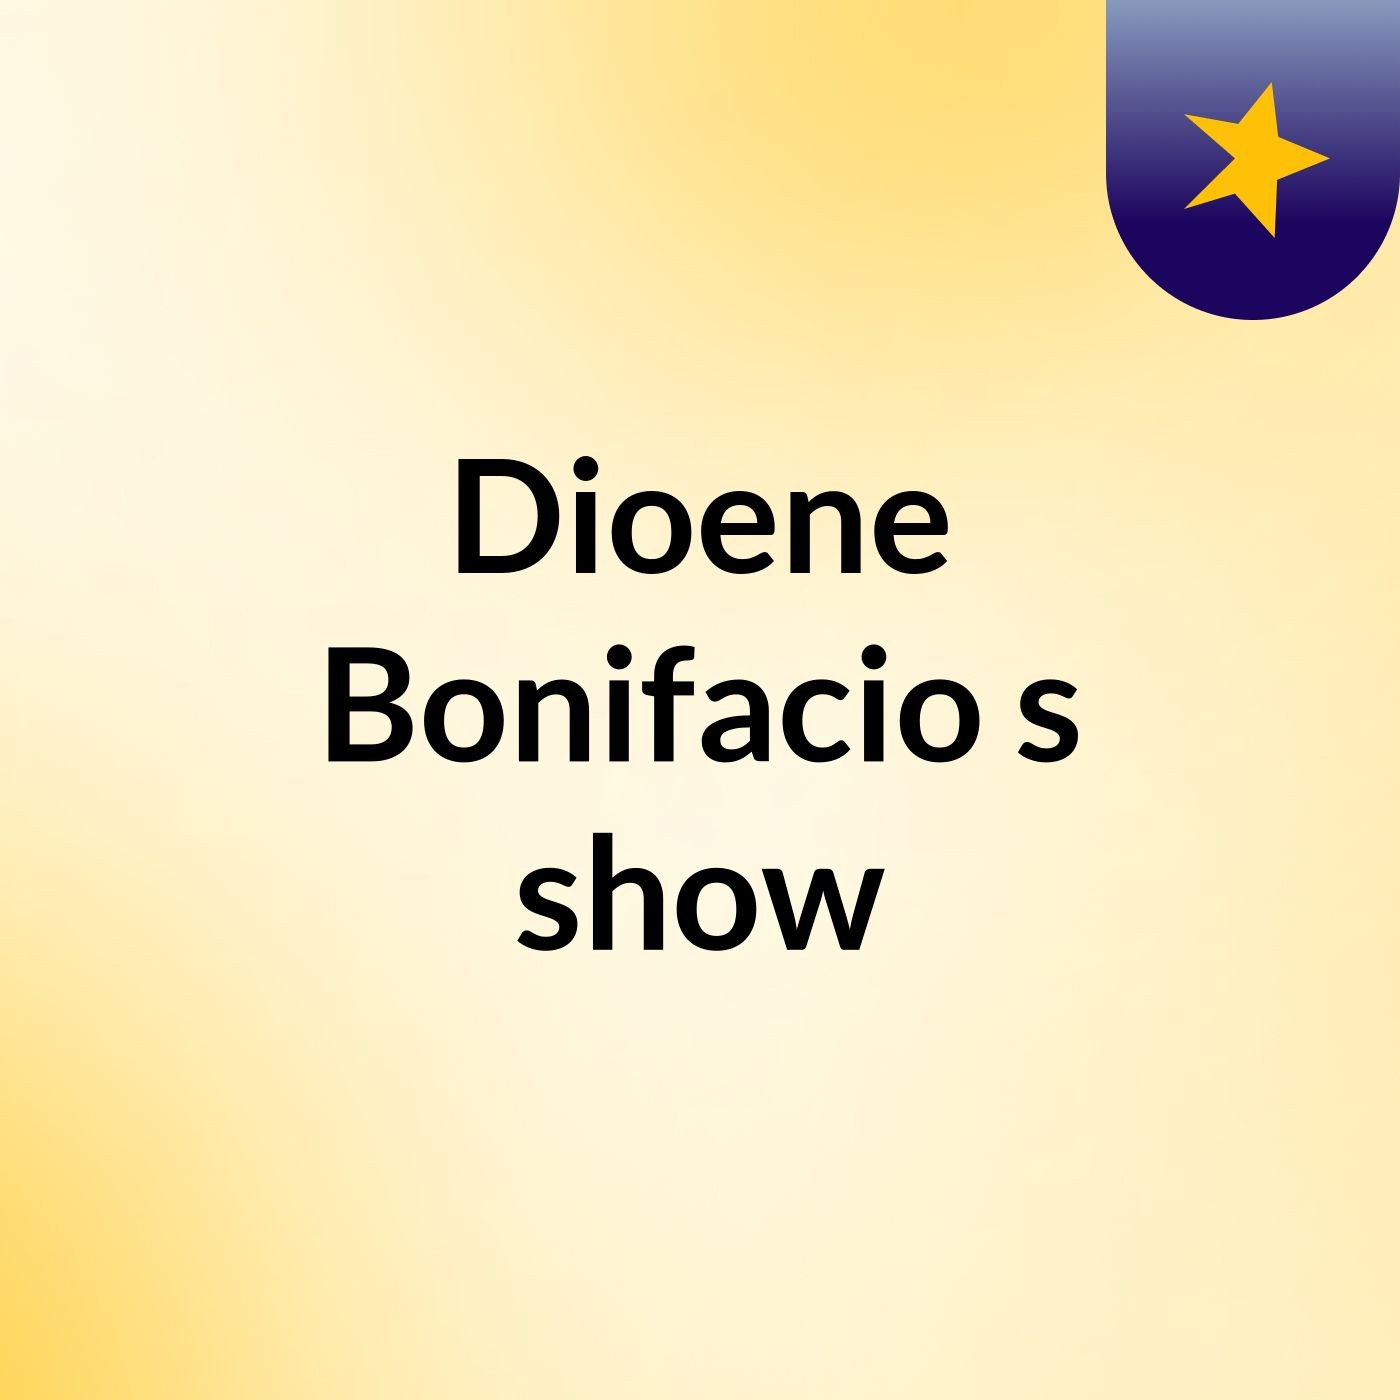 Dioene Bonifacio's show